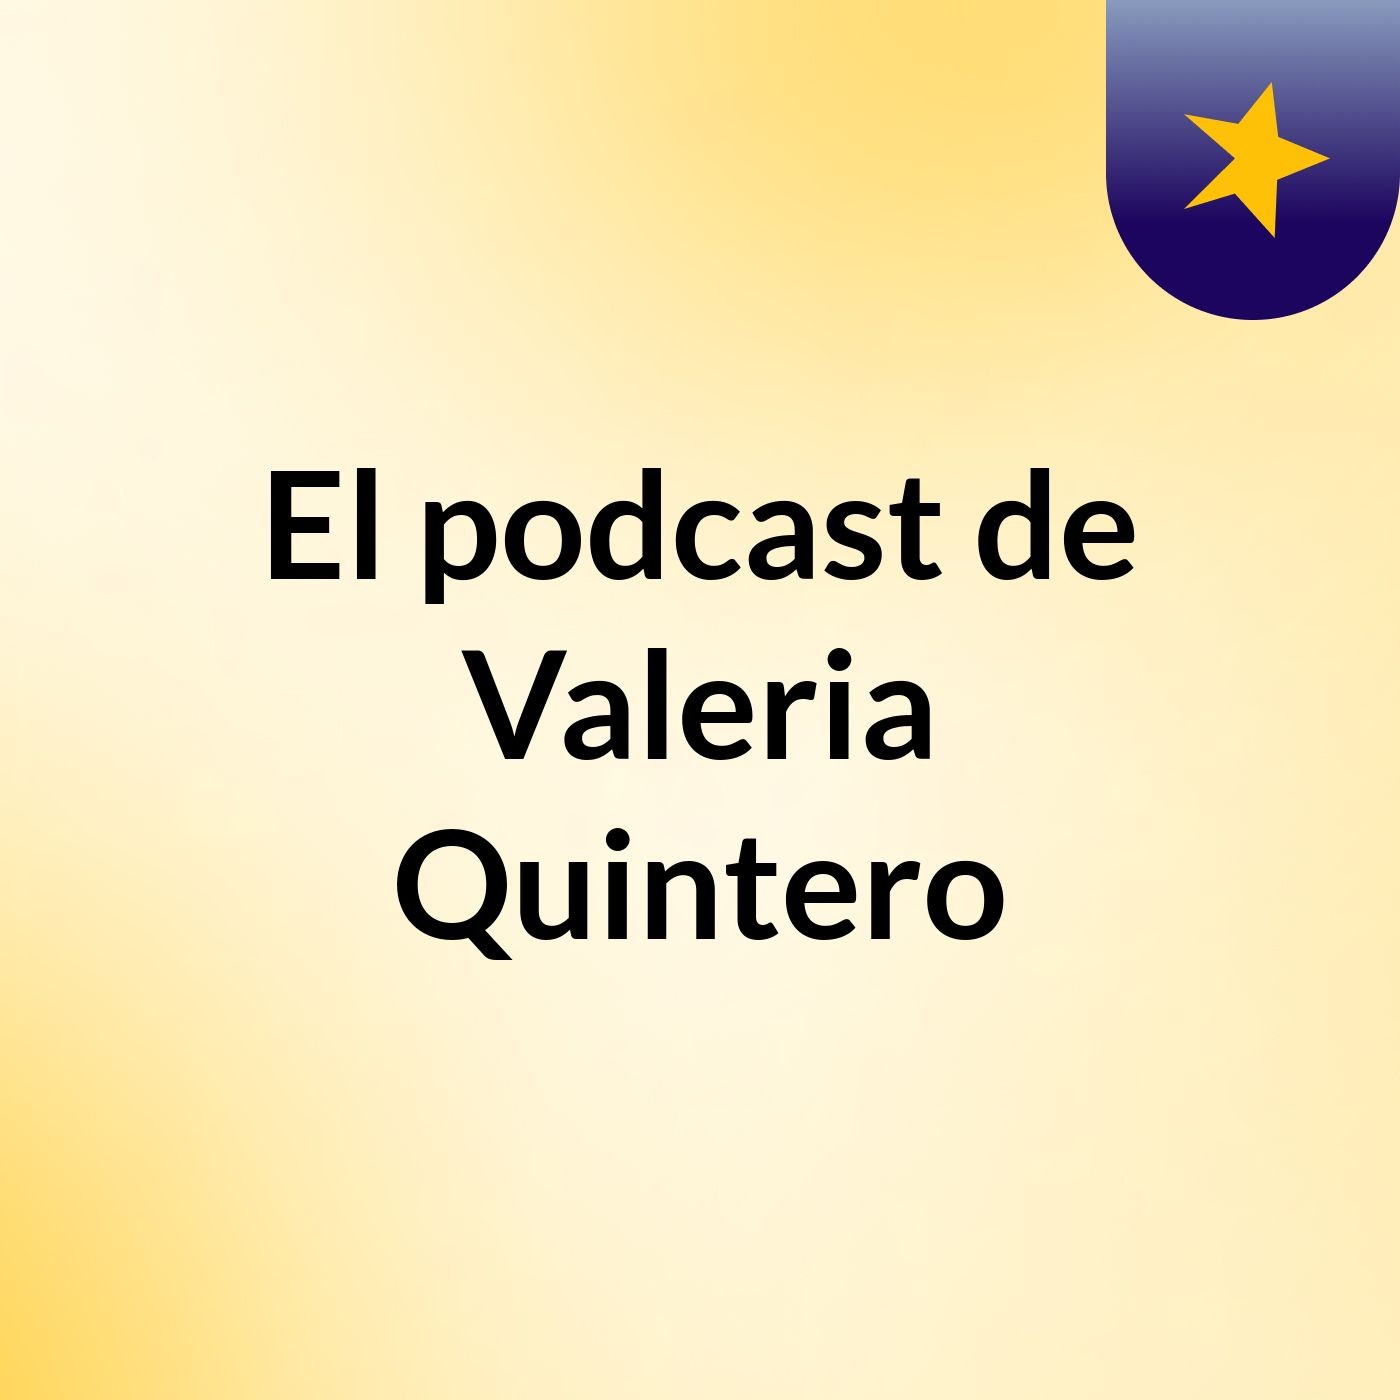 El podcast de Valeria Quintero